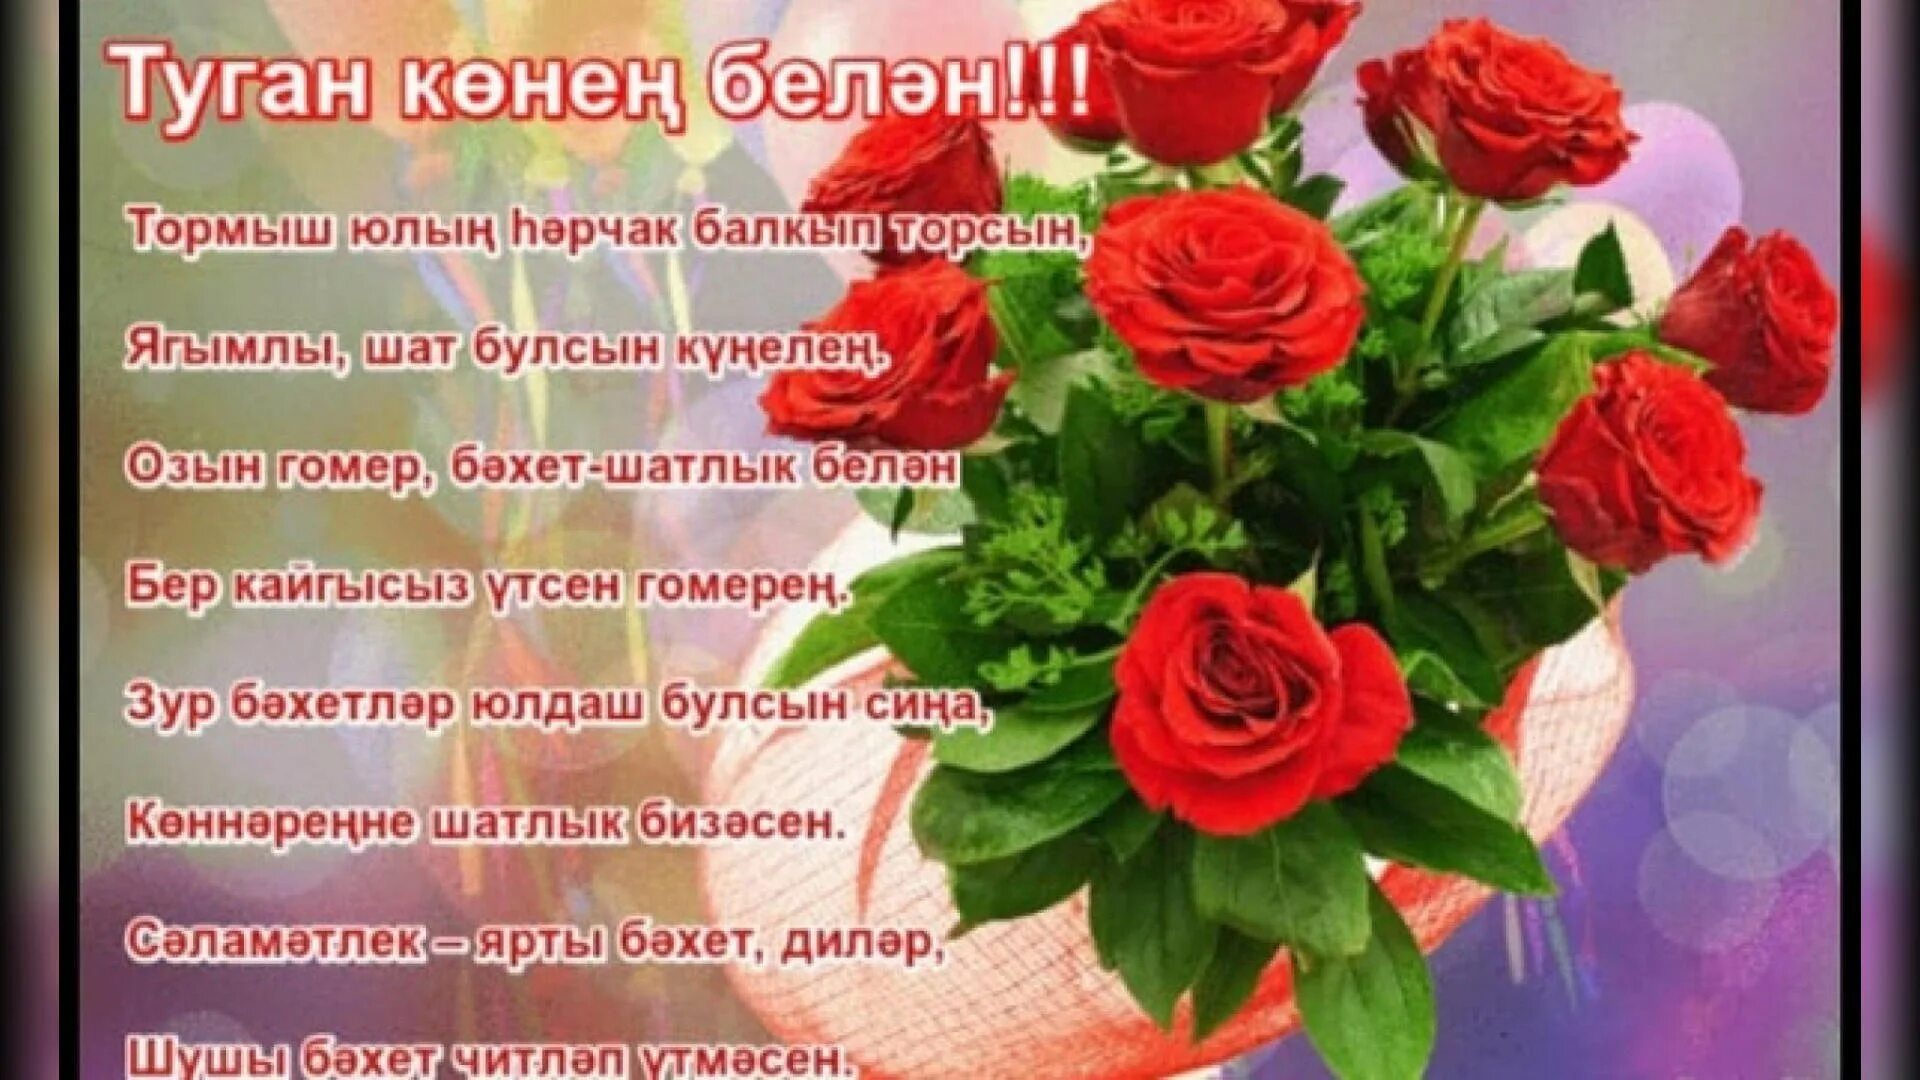 Туган конен белэн кыска. Татарские поздравления с днем рождения. Поздравления с днём рождения на татарском языке. Поздравления с днём рождения женщине на татарском языке. Поздравления с днём рождения женщине на татарском.